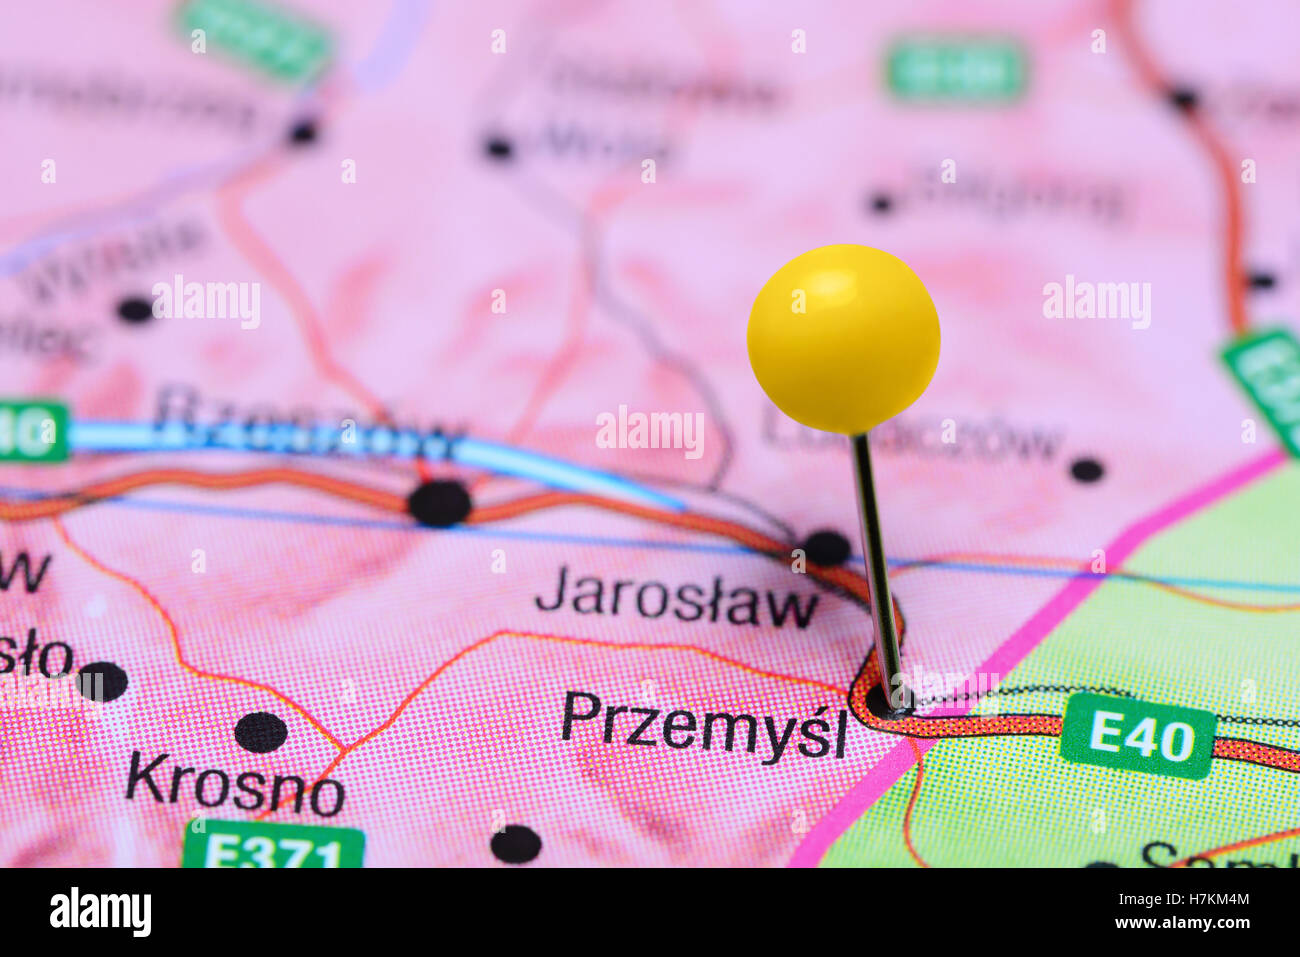 Przemysl pinned on a map of Poland Stock Photo